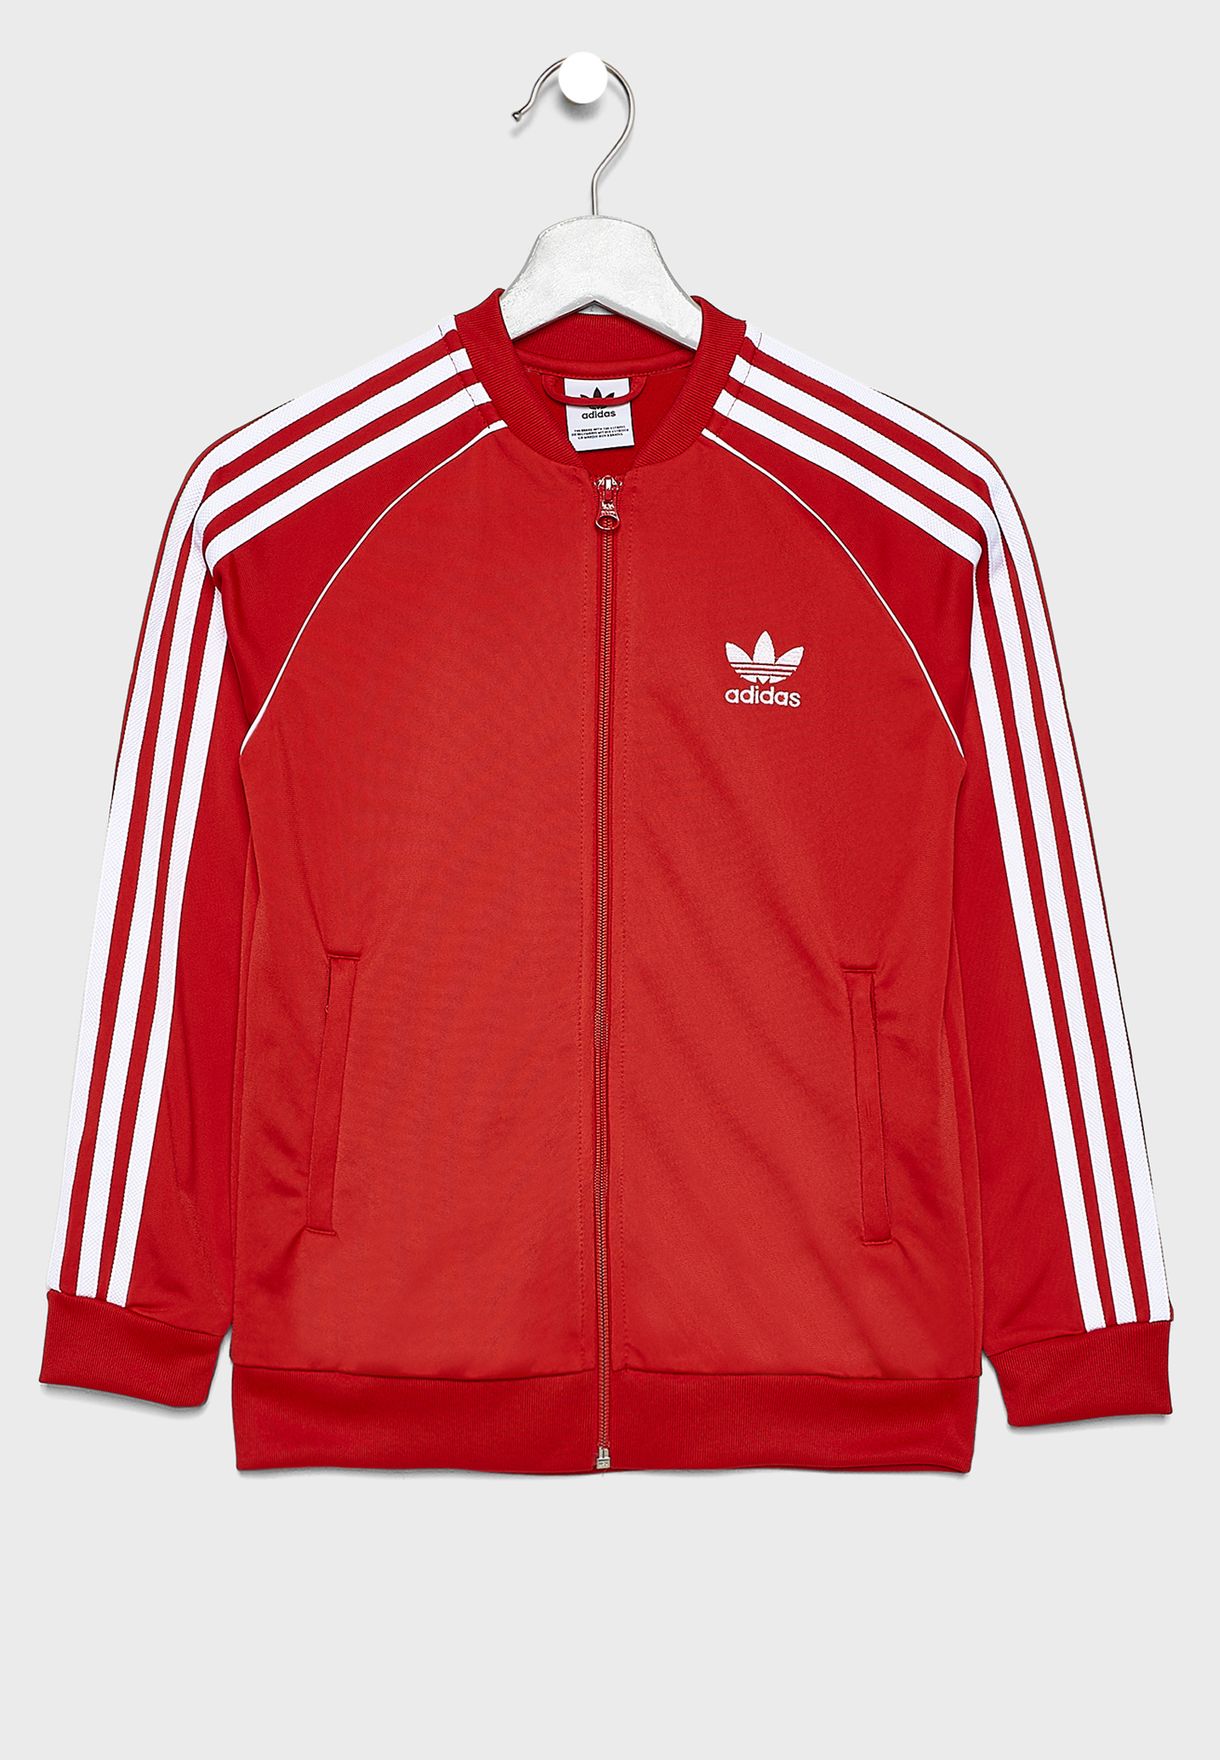 adidas superstar track jacket red